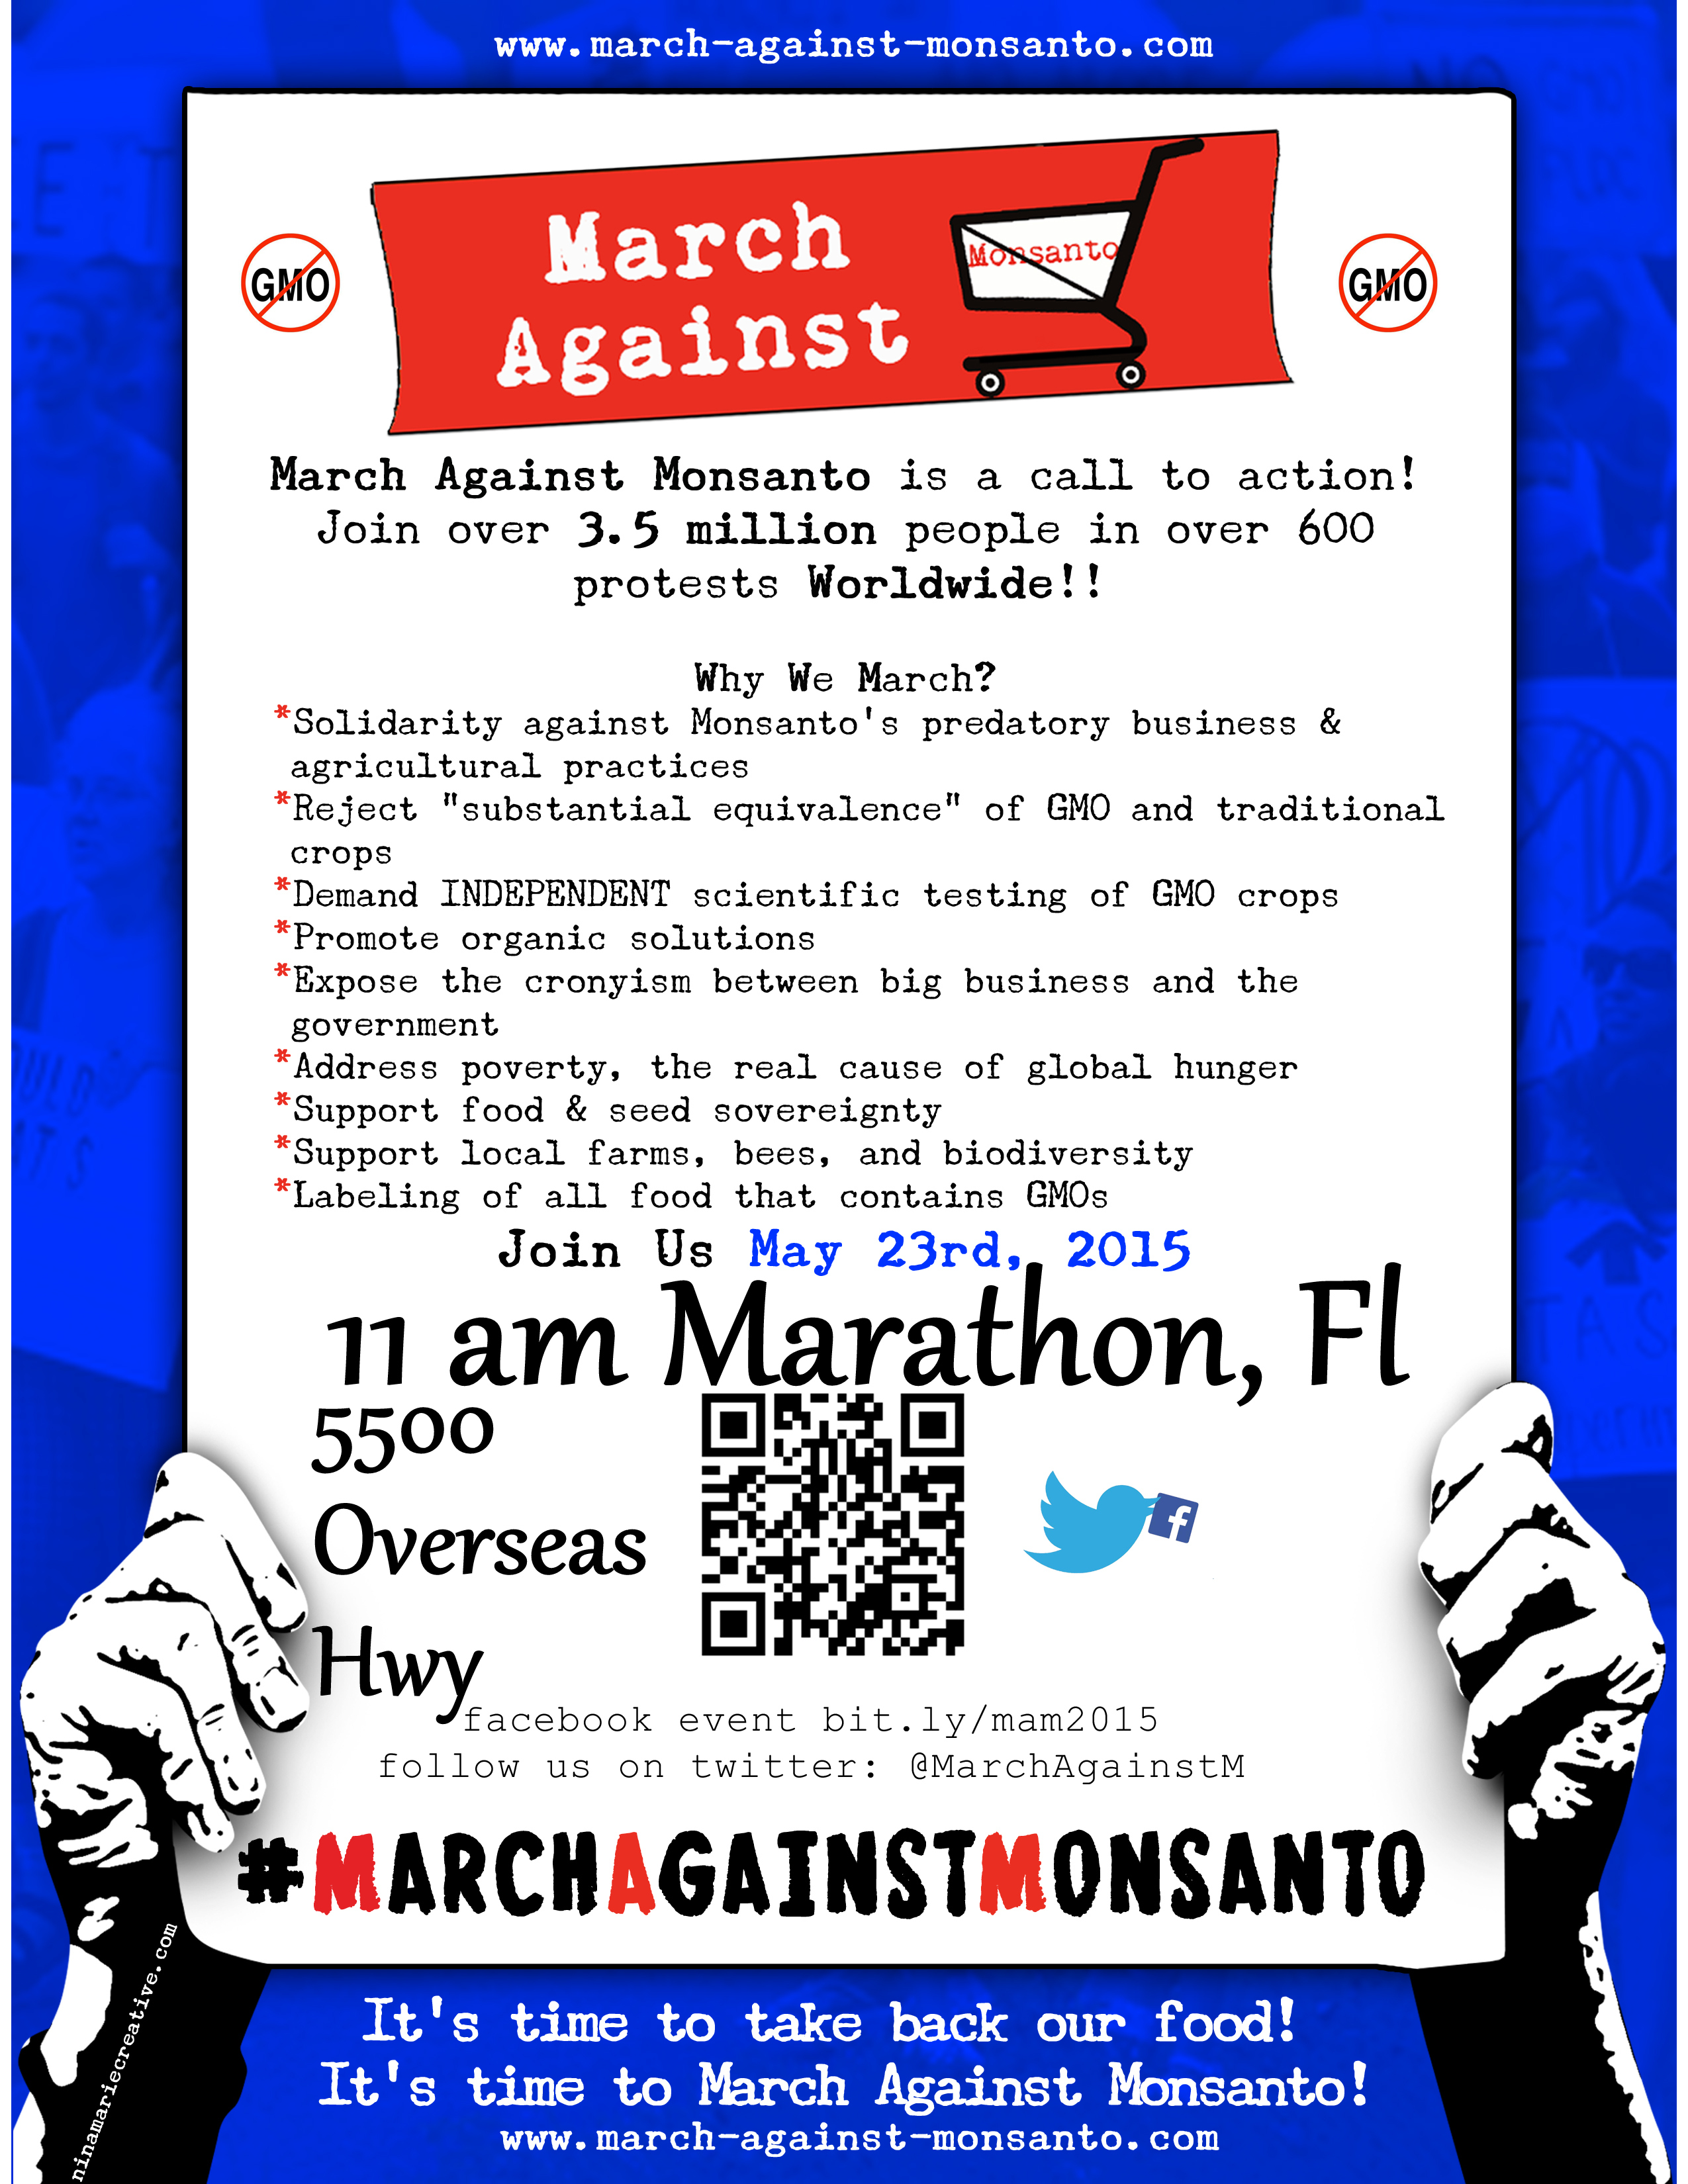 March Against Monsanto, Marathon, Key West, and Worldwide, Saturday